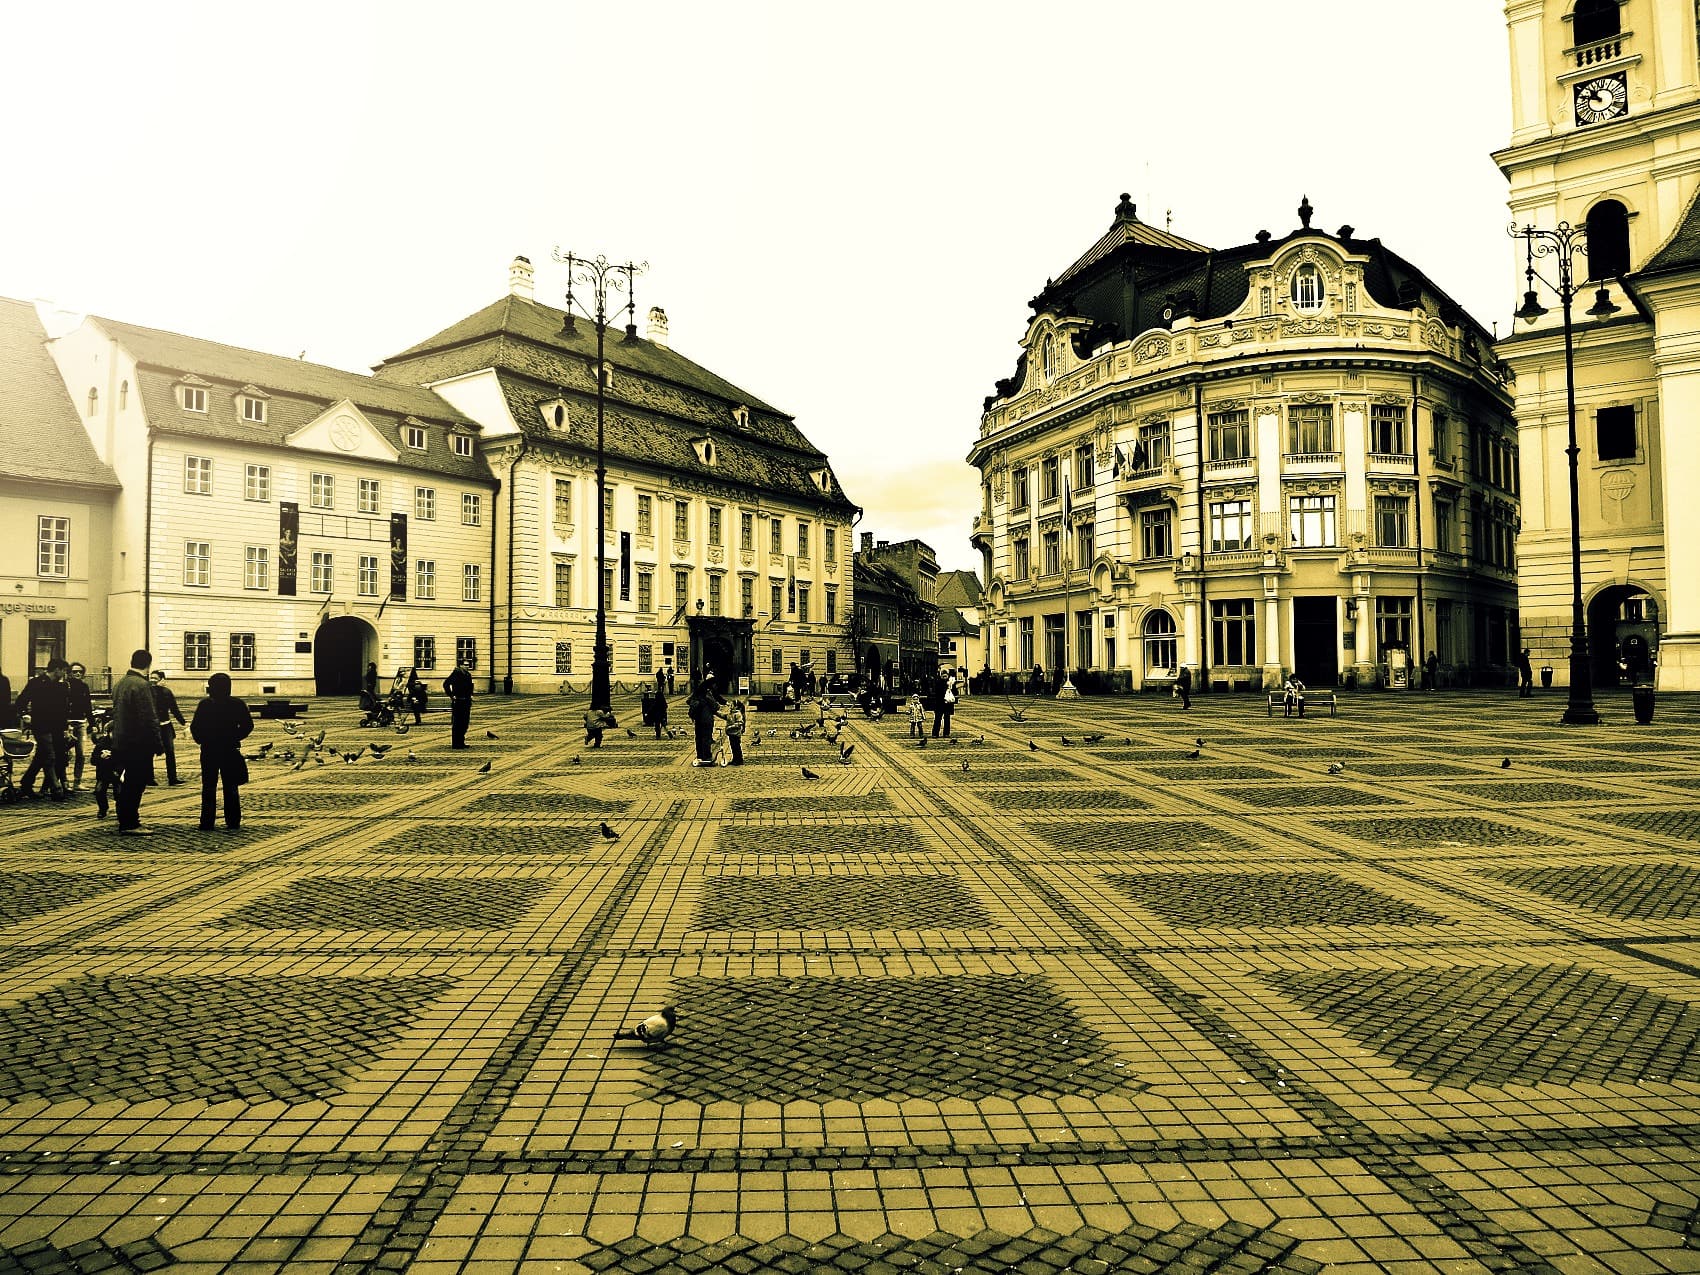 Sibiu Grand Square